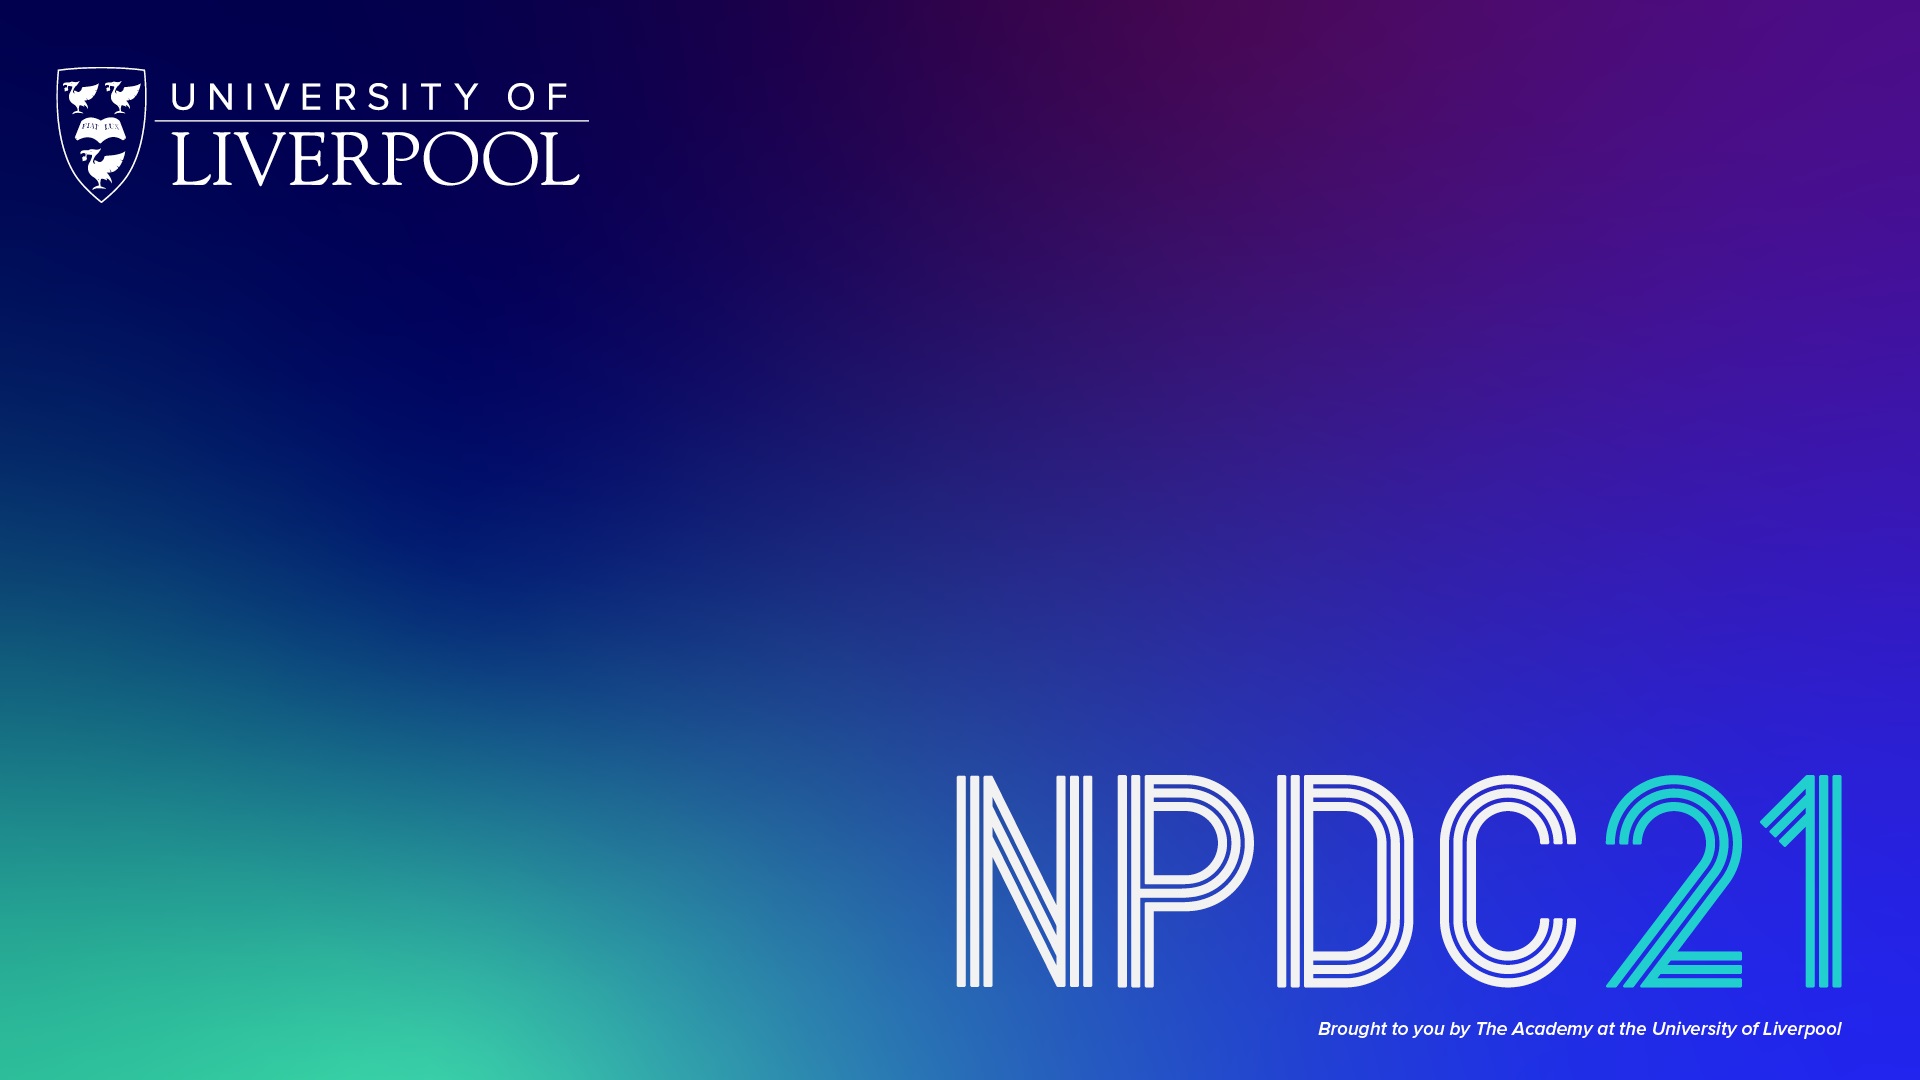 NPDC Zoom background option 2